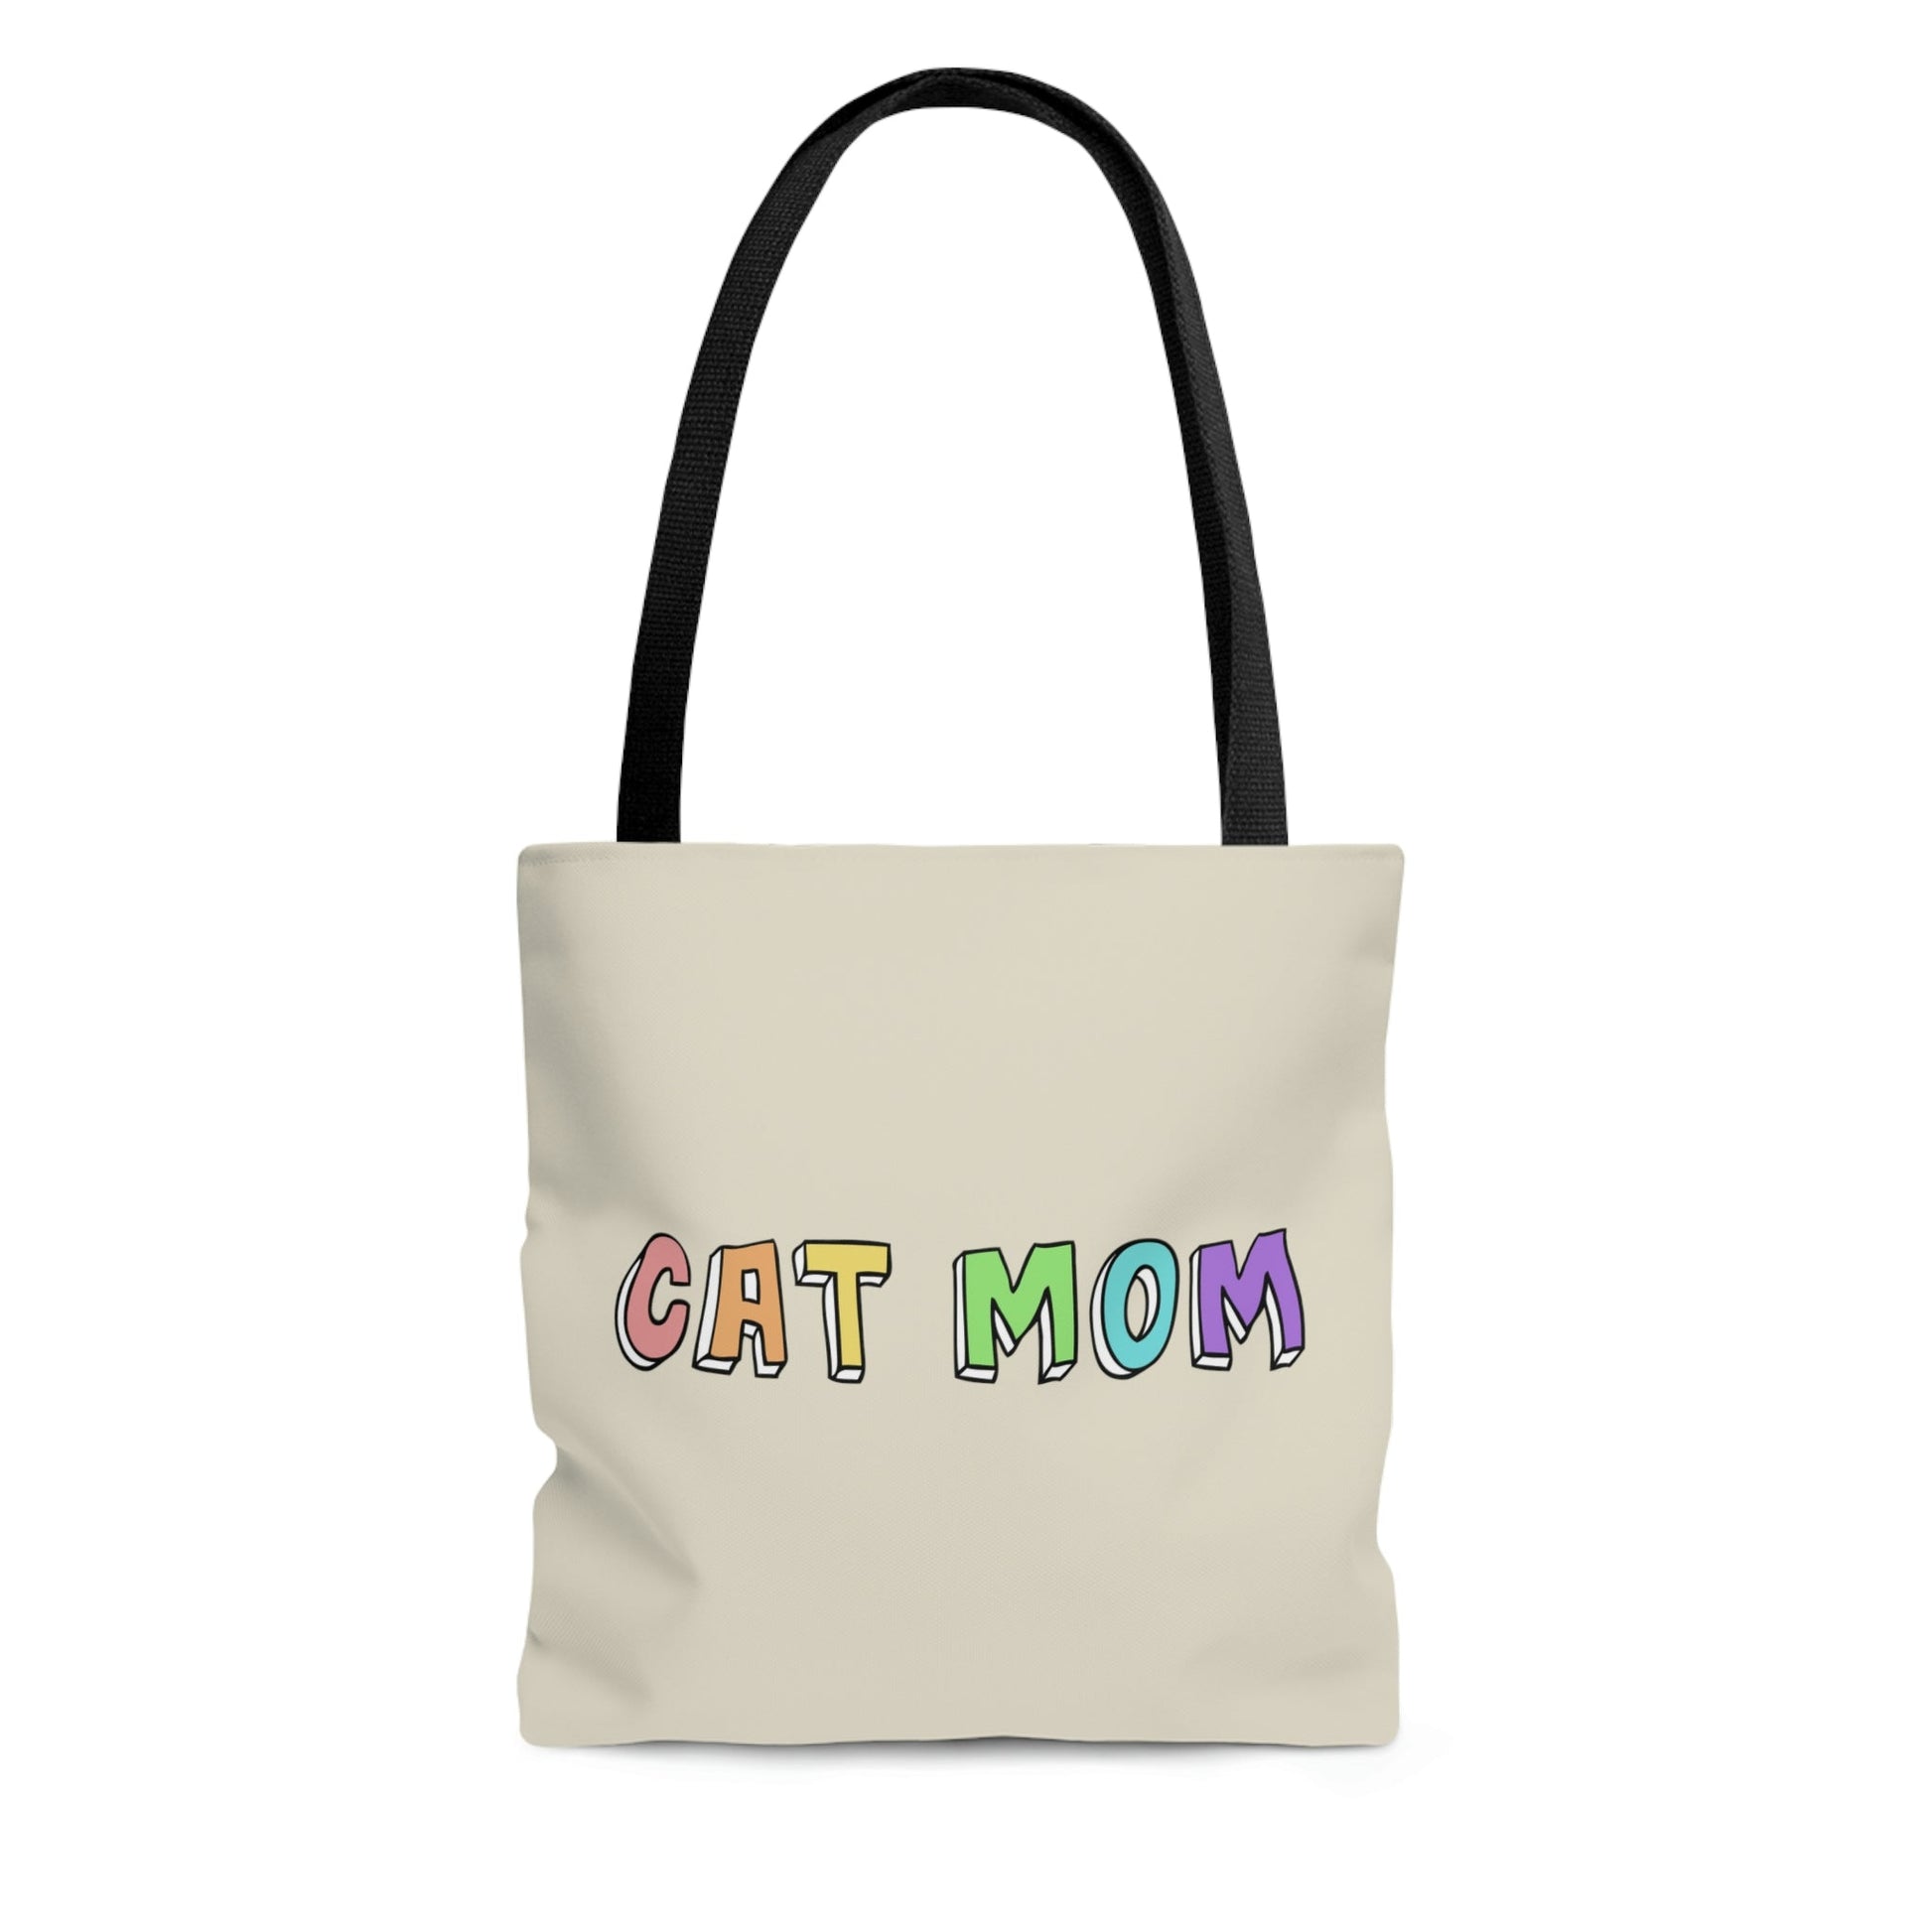 Cat Mom | Tote Bag - Detezi Designs-23610457387388441006